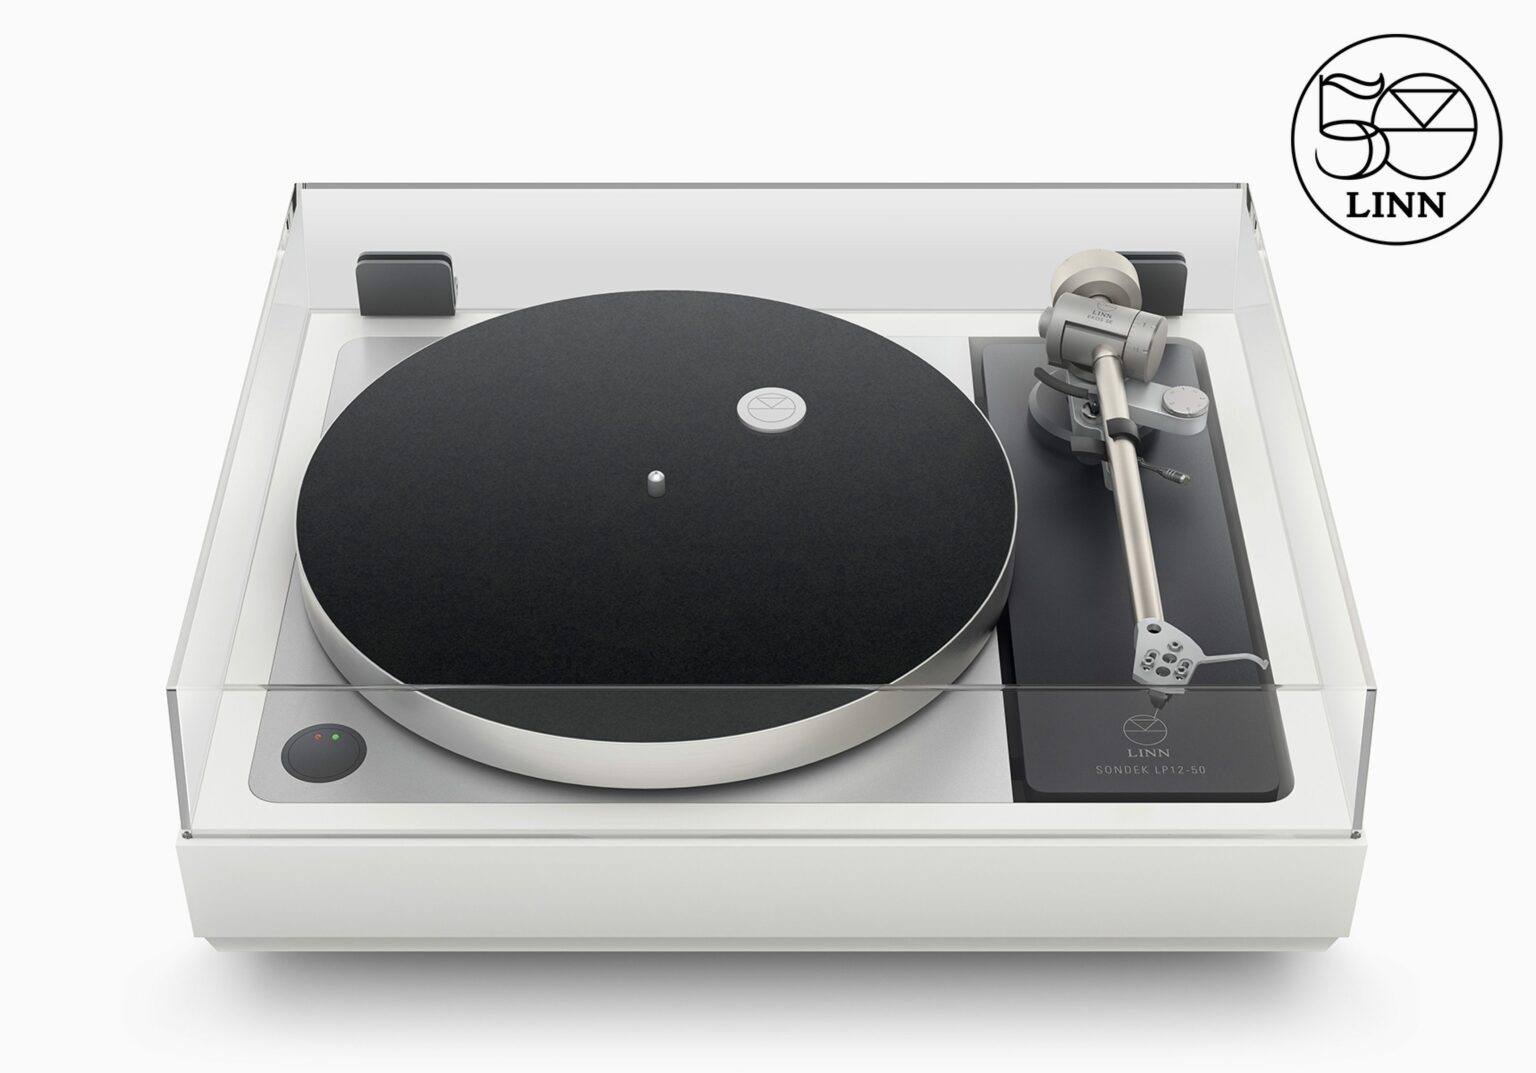 Jony Ive's design firm LoveFrom worked on the new Linn Sondek LP12-50 turntable.